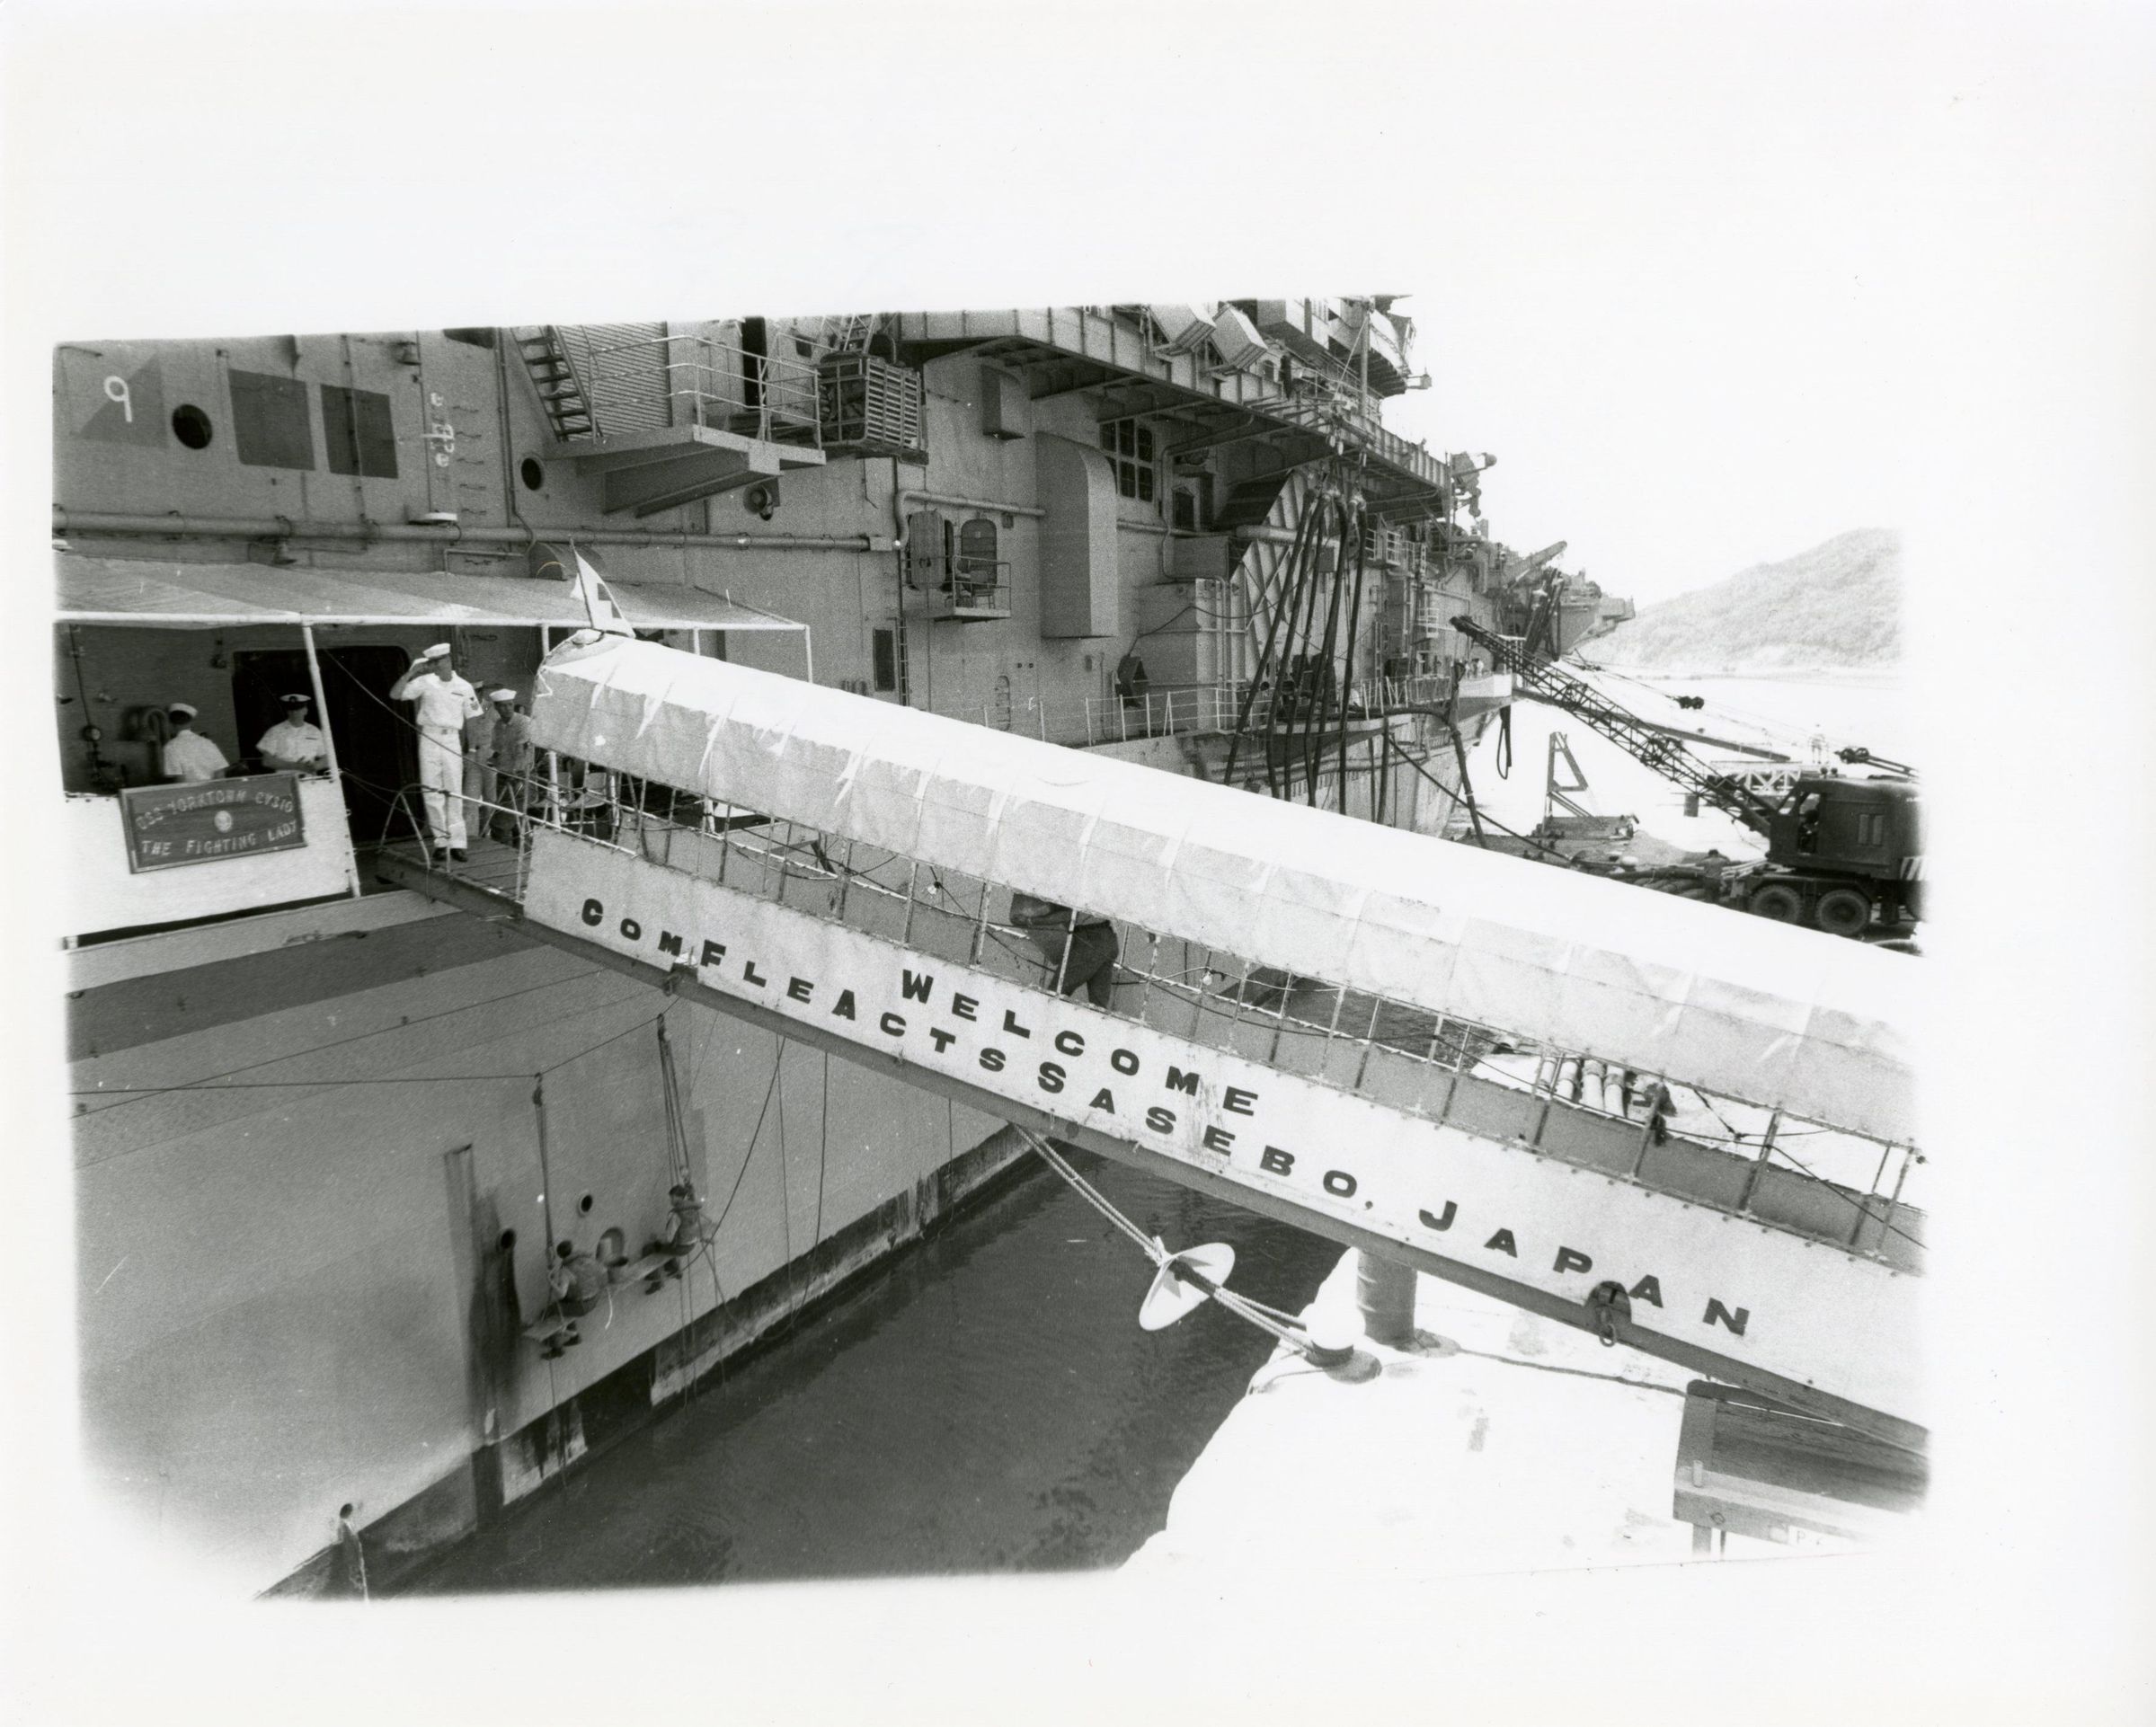 Primary Image of USS Yorktown (CVS-10) Visits Sasebo, Japan in 1968